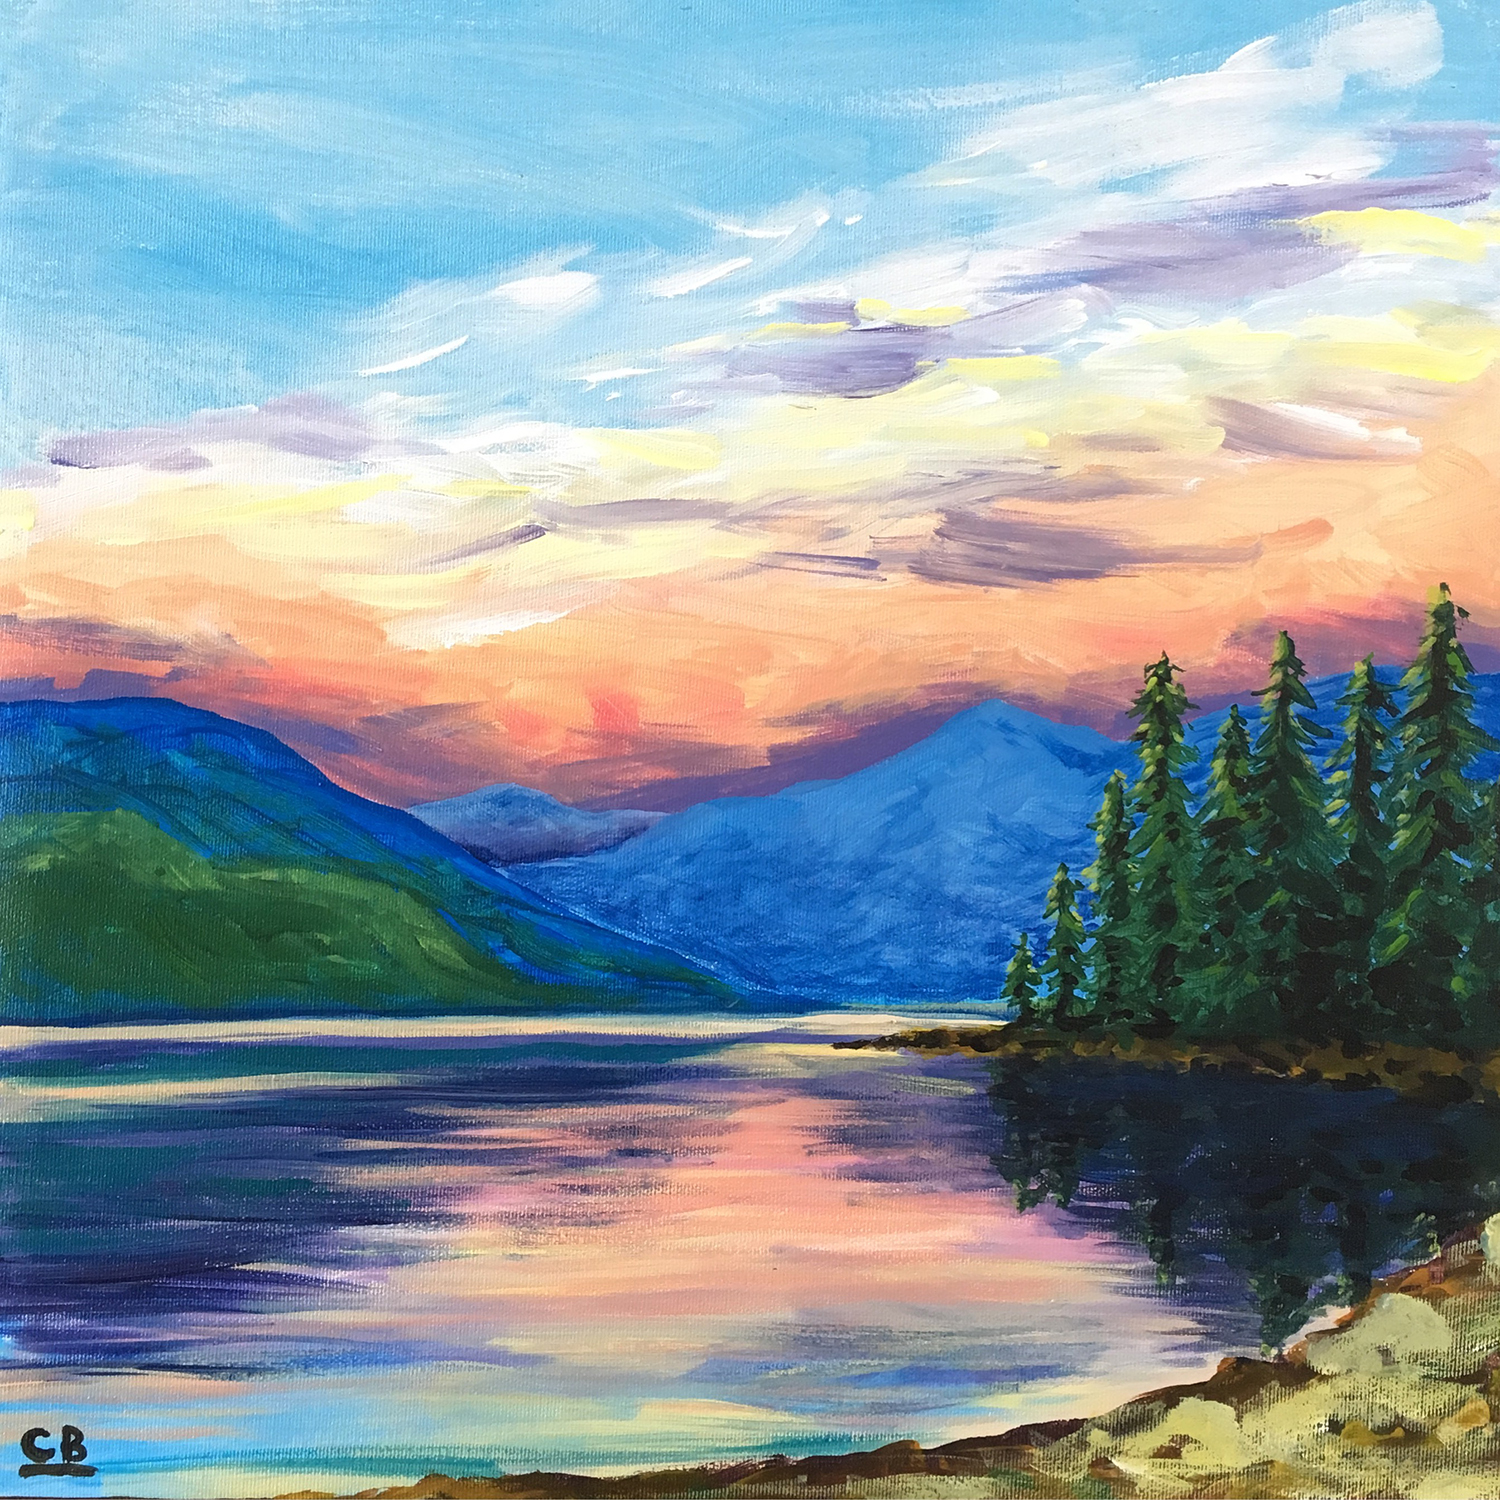 acrylic on canvas of lake scene